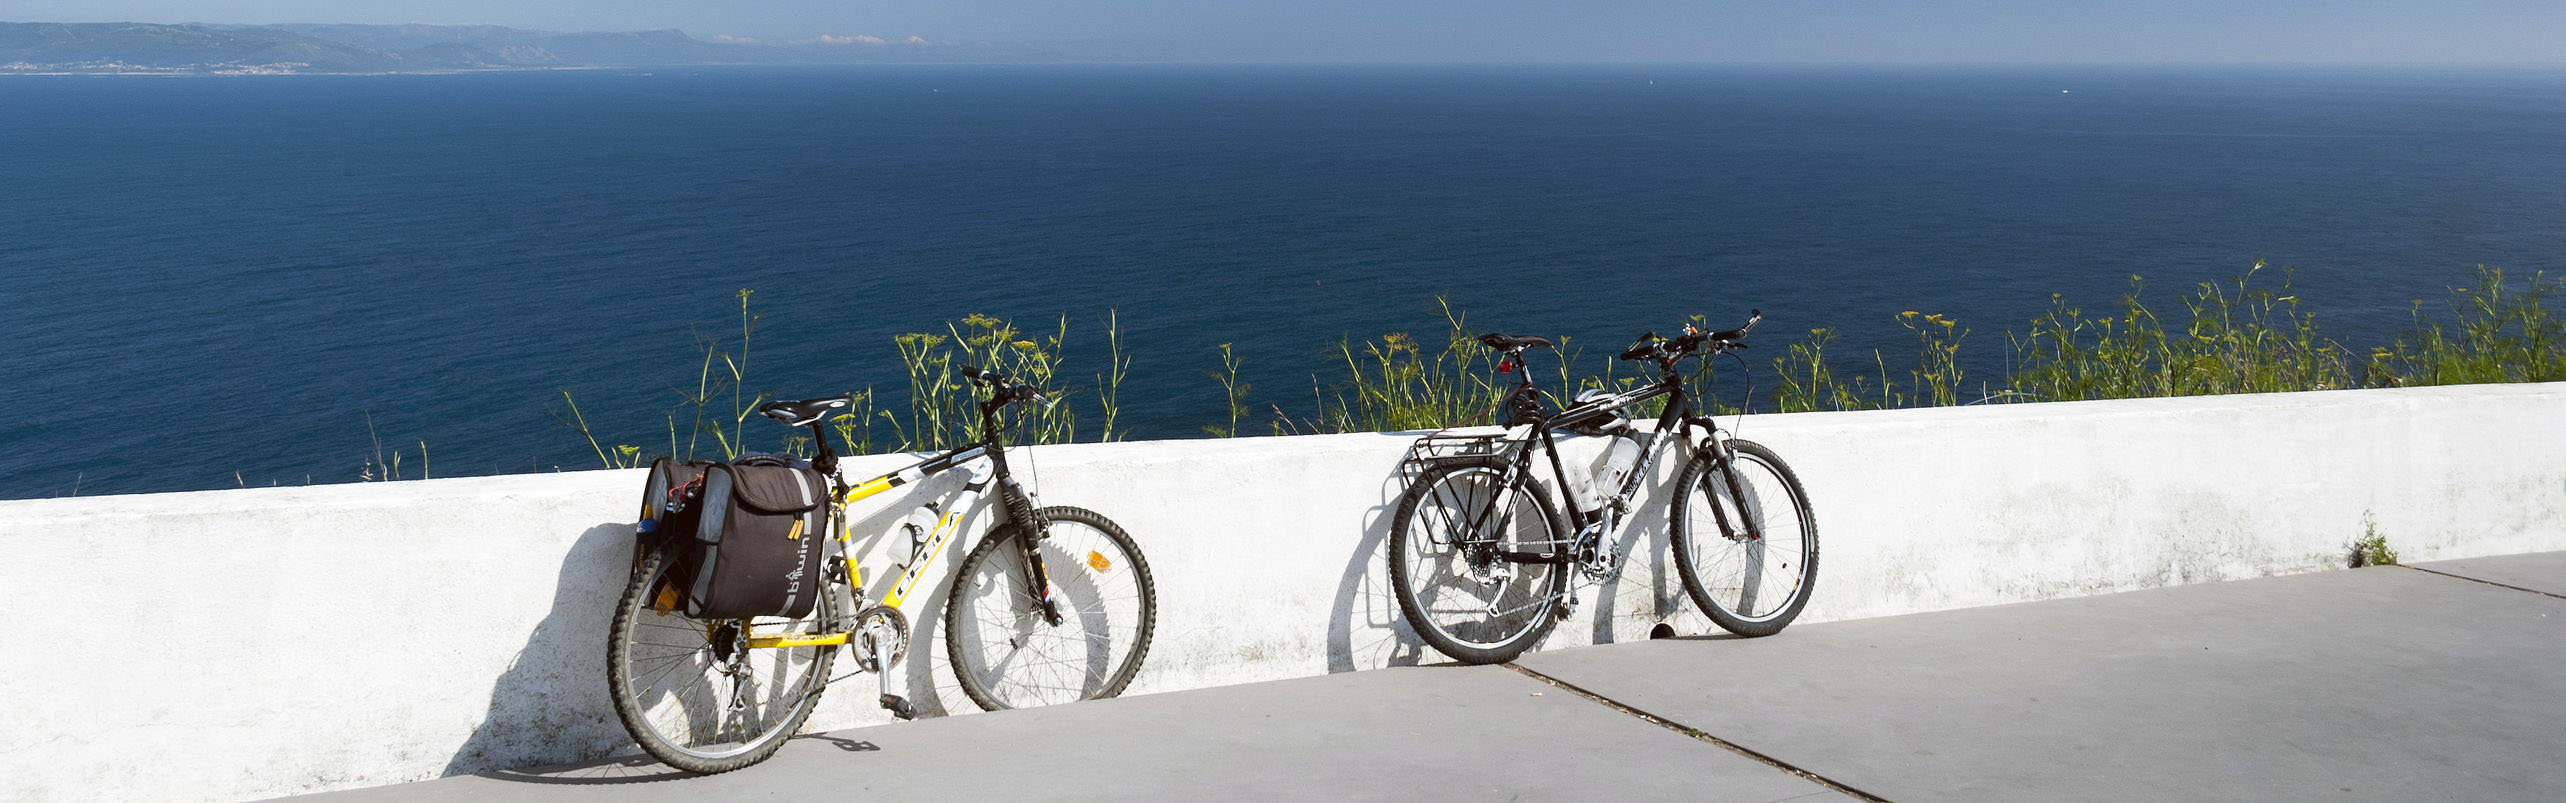 Bike Finisterre Muxia Camino Adventure Camino Tours 1367